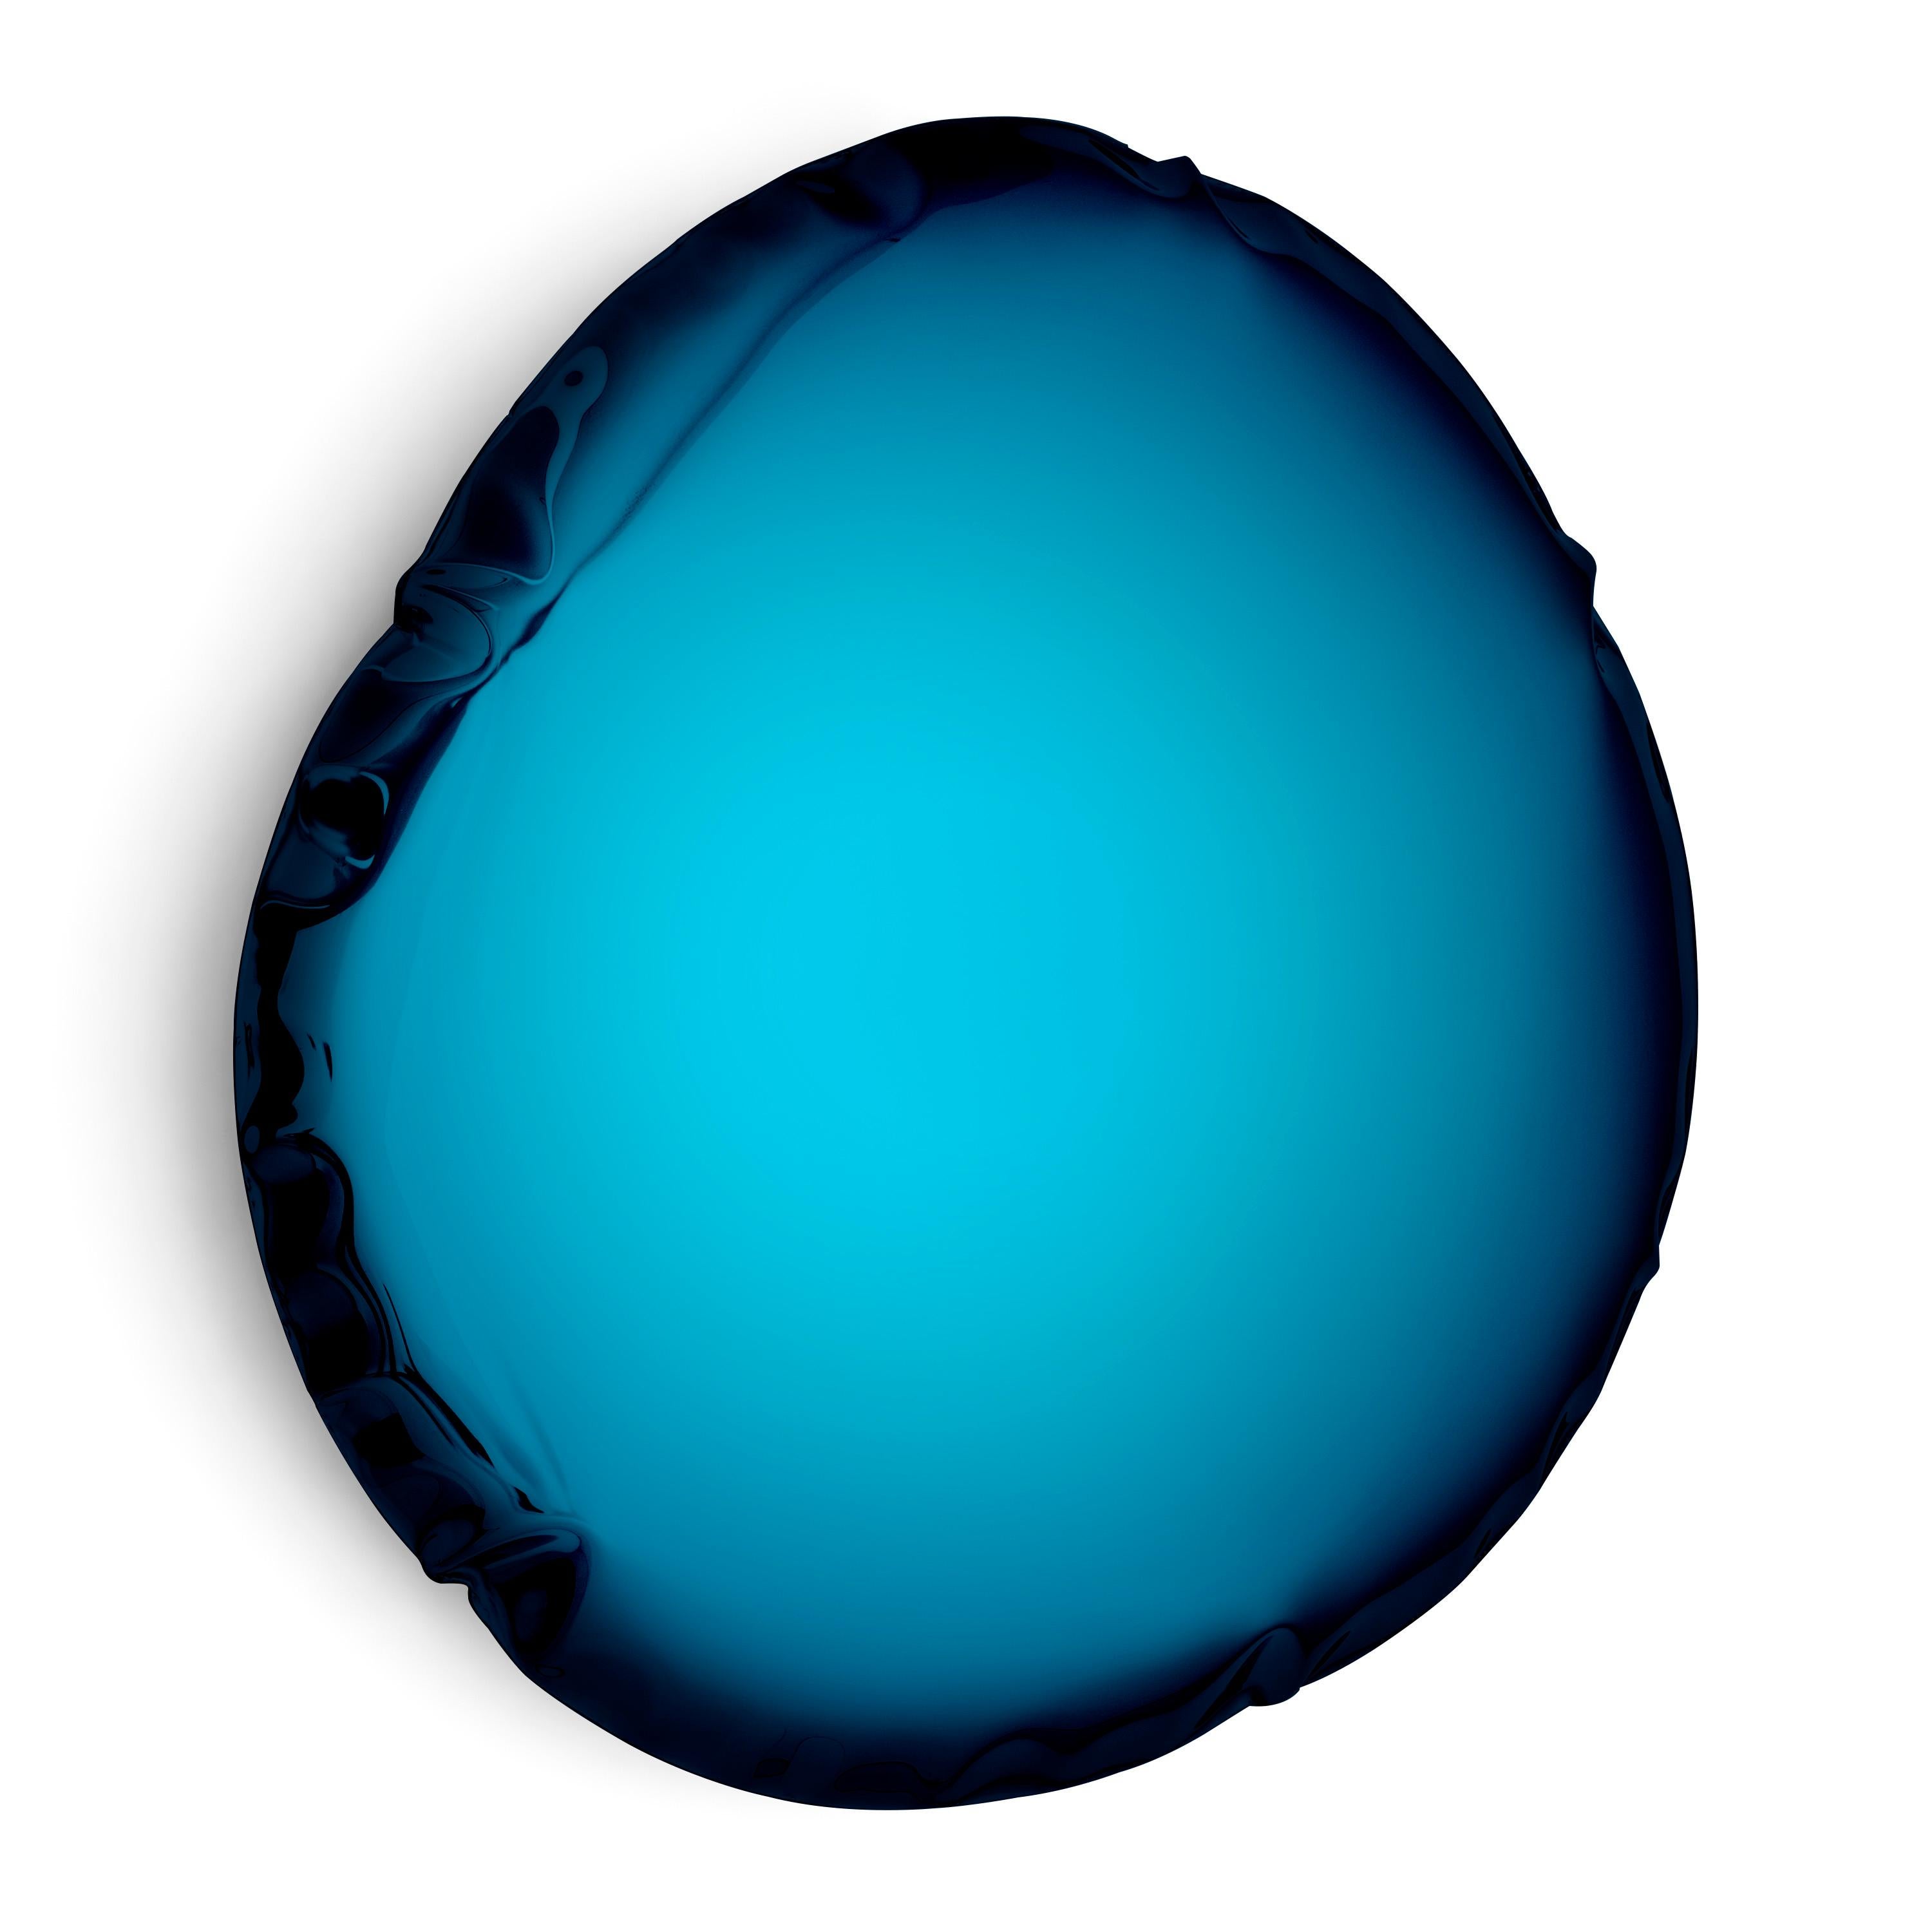 Deep space blue tafla O6 wall mirror by Zieta
Dimensions: D 6 x W 50 x H 55 cm 
Material: Stainless steel.
Finish: Deep Space Blue. 
Available finishes: Stainless Steel, White Matt, Sapphire/Emerald, Sapphire, Emerald, Deep space blue, Dark